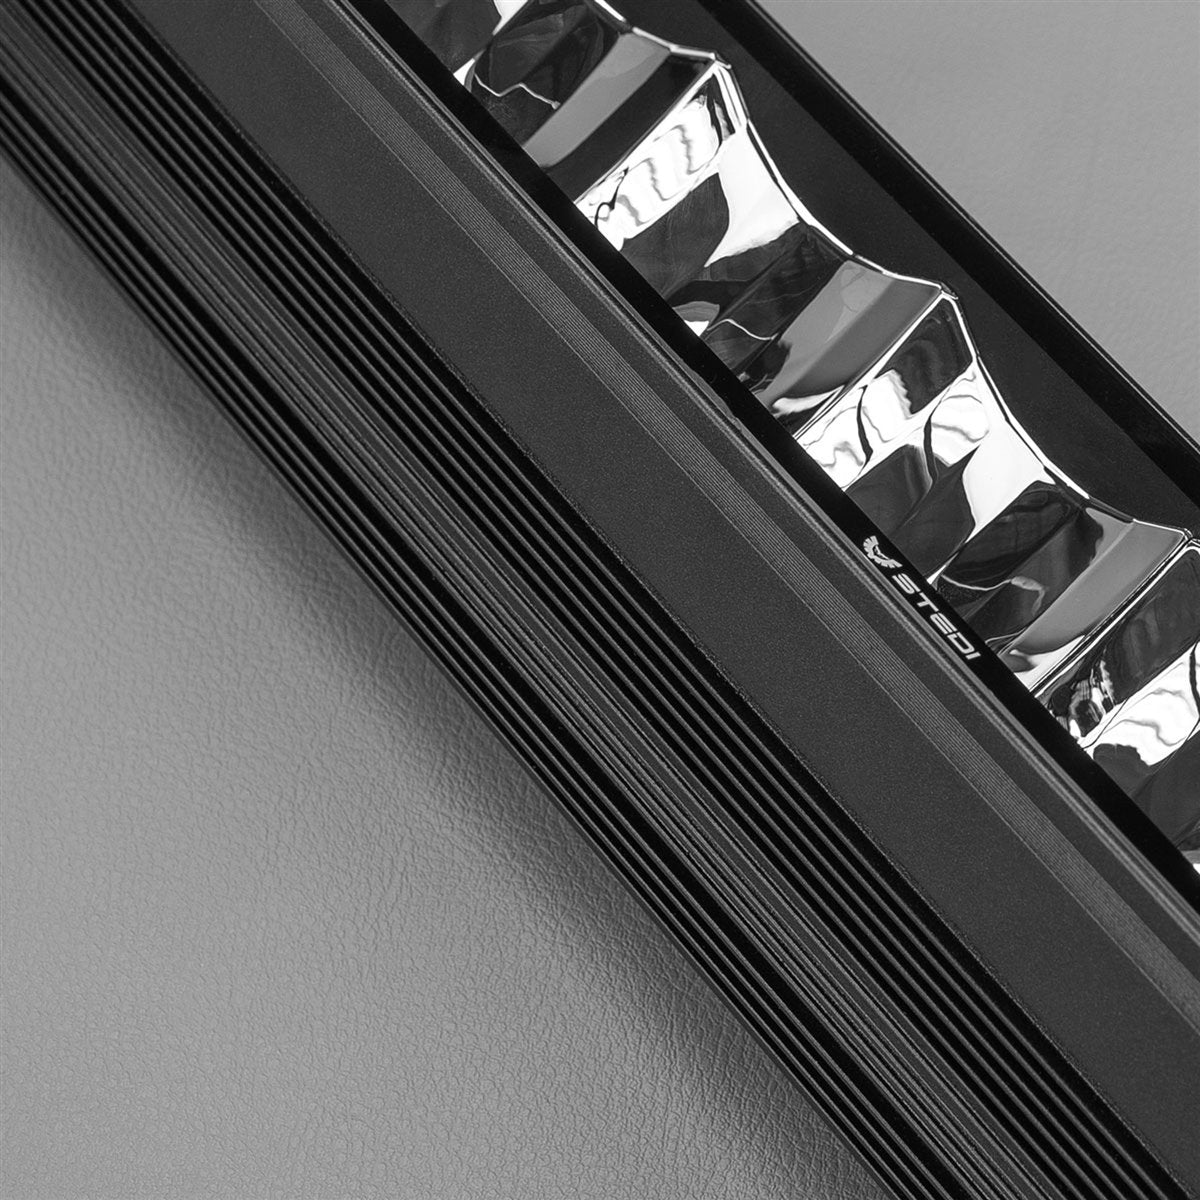 Stedi STX 12 inch light bar close up